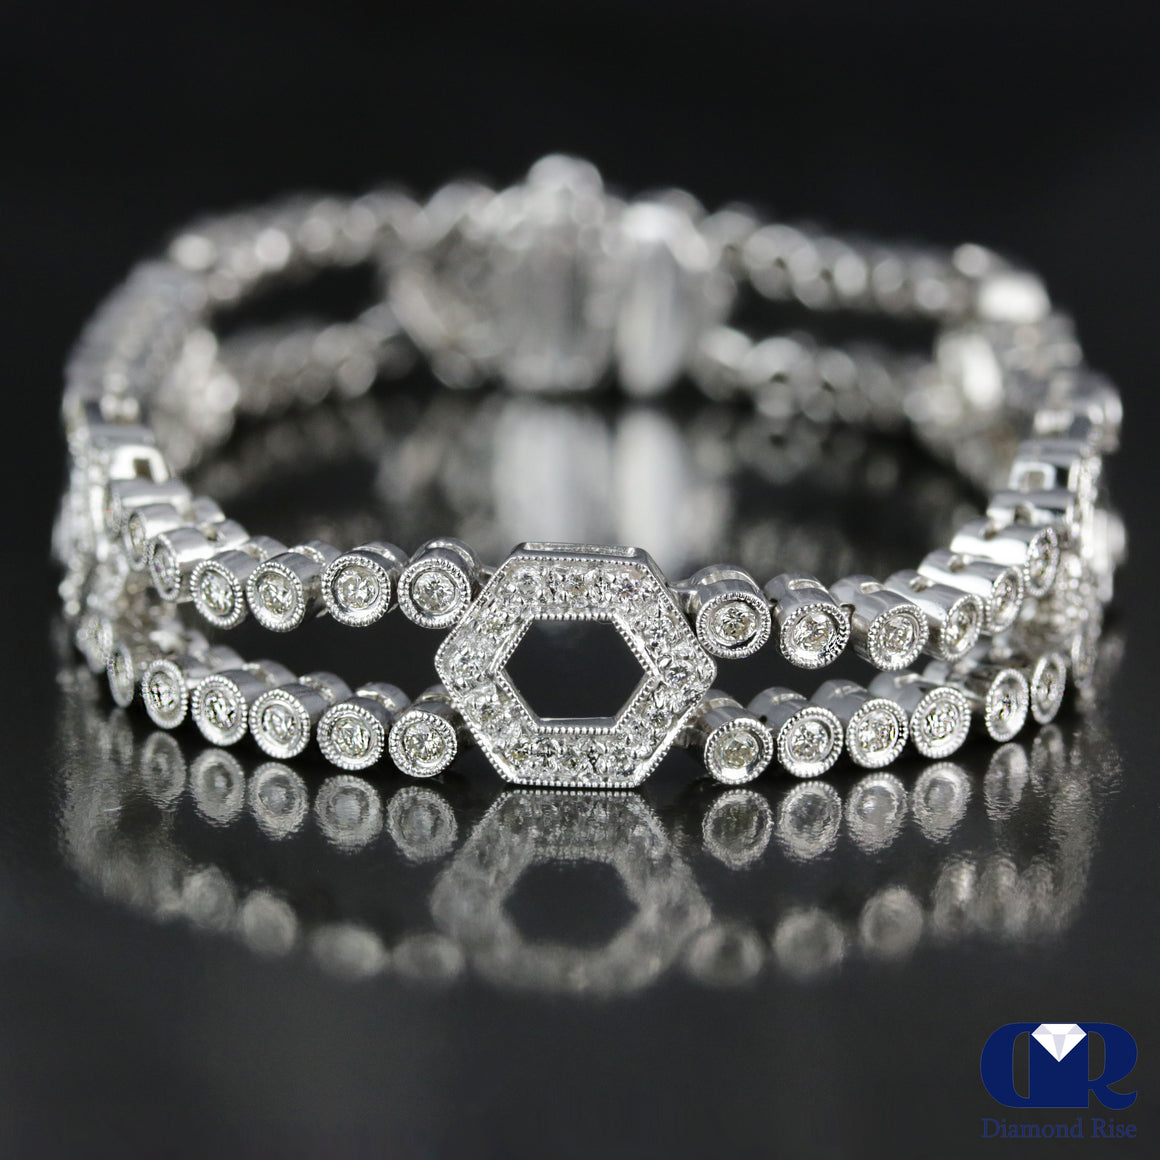 3.32 Carat Round Cut Diamond Vintage Style Bracelet In 14K Whit Gold - Diamond Rise Jewelry